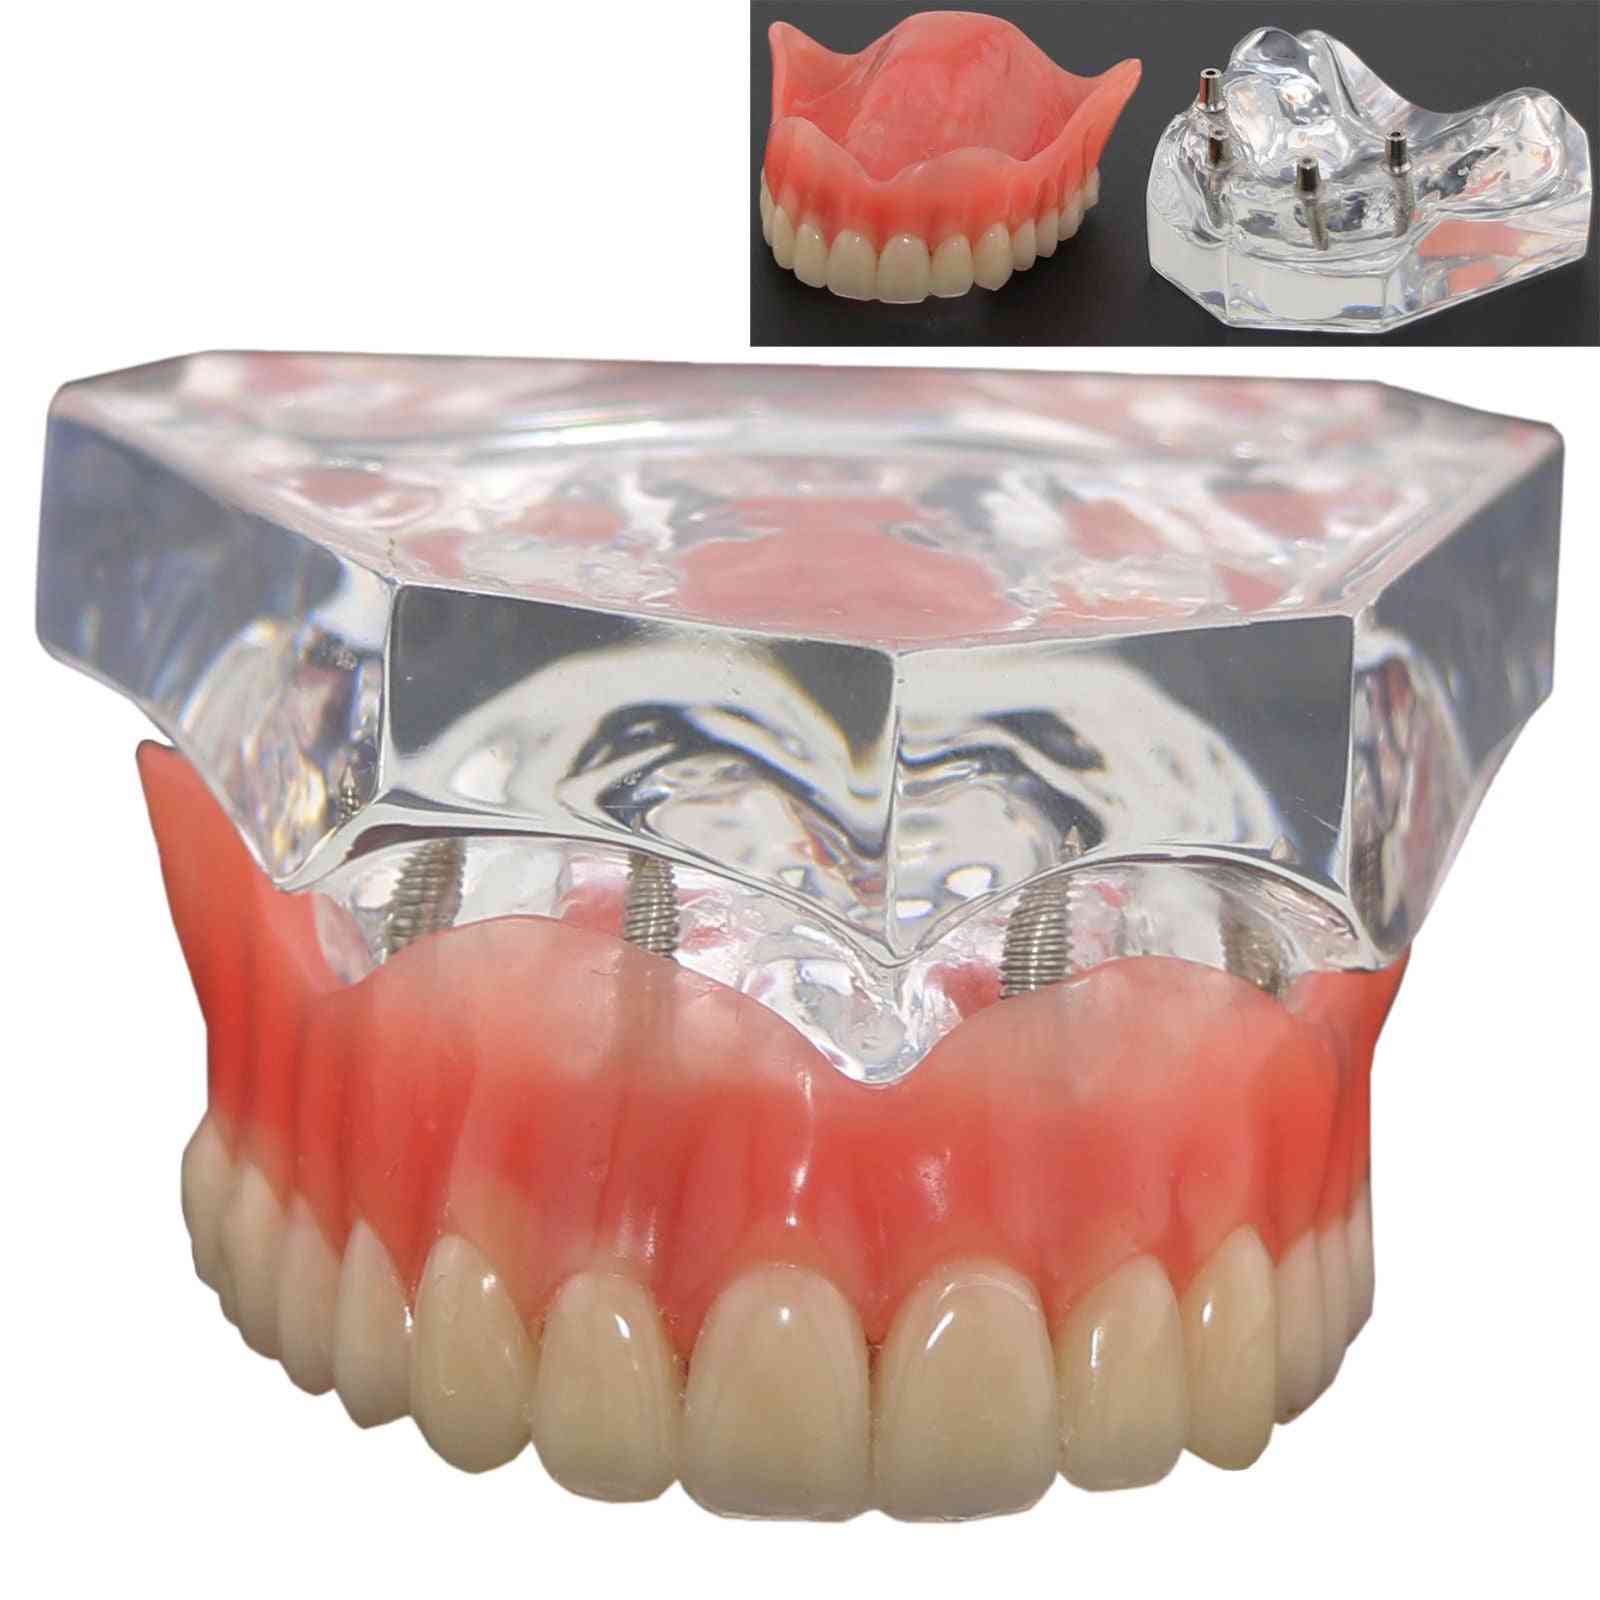 1pcs Dental Upper Overdenture Superior 4 Implants Demo Model, Teeth Model